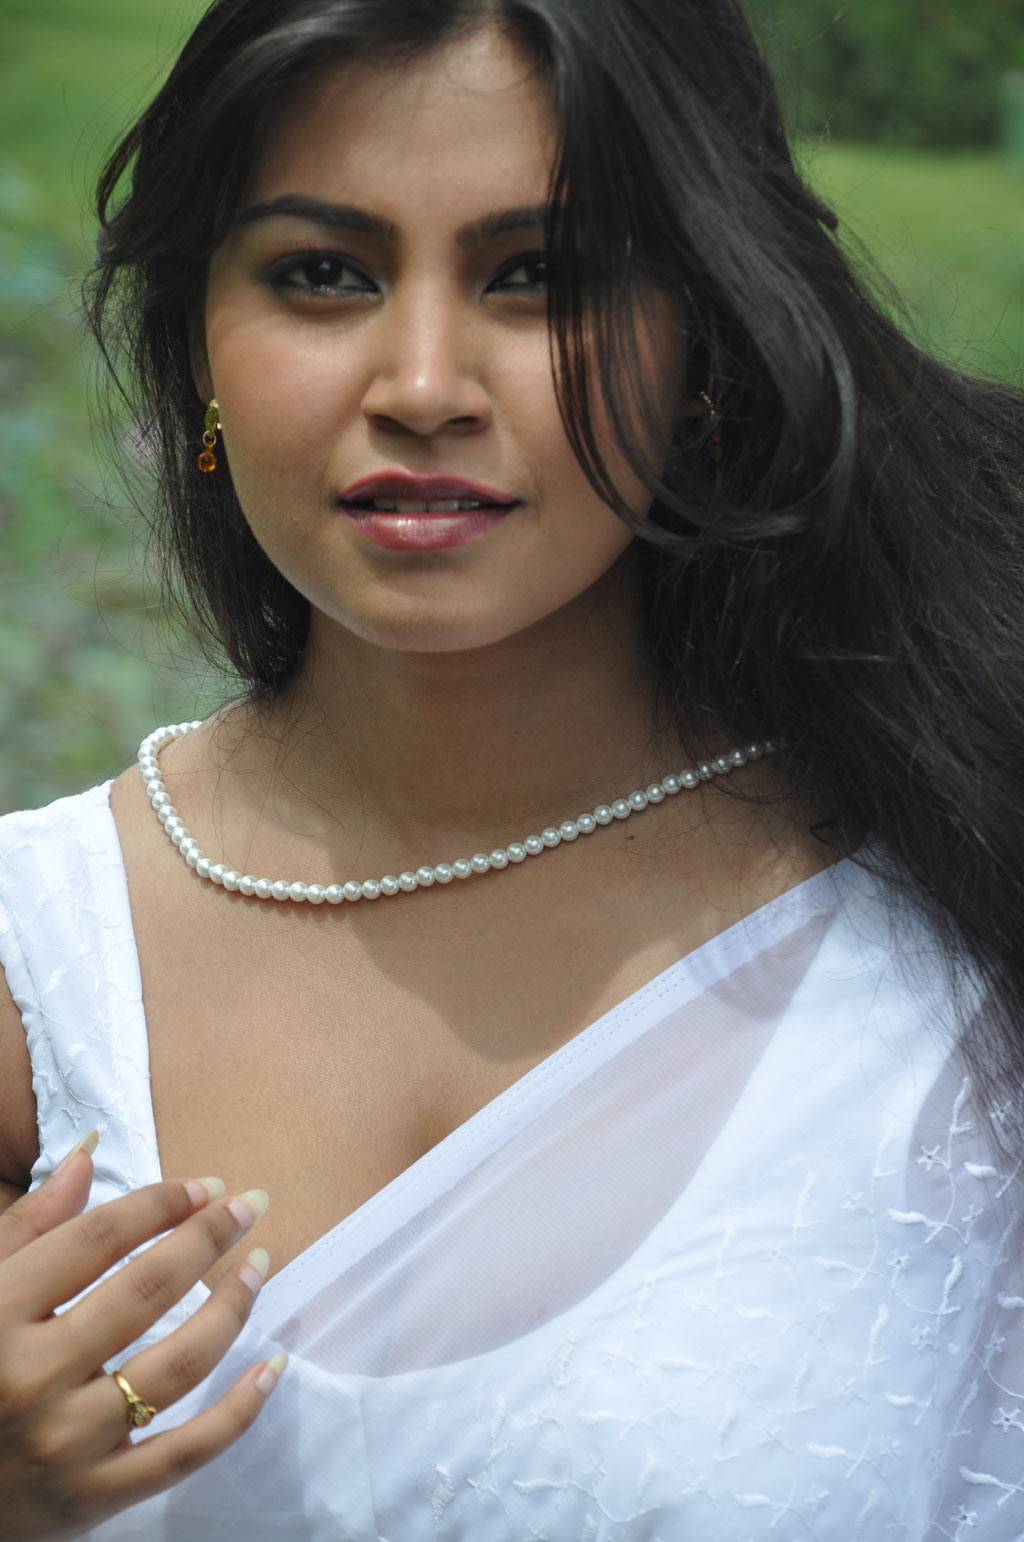 Photo Sharing: Hot Tamil Actress in White Saree Photos